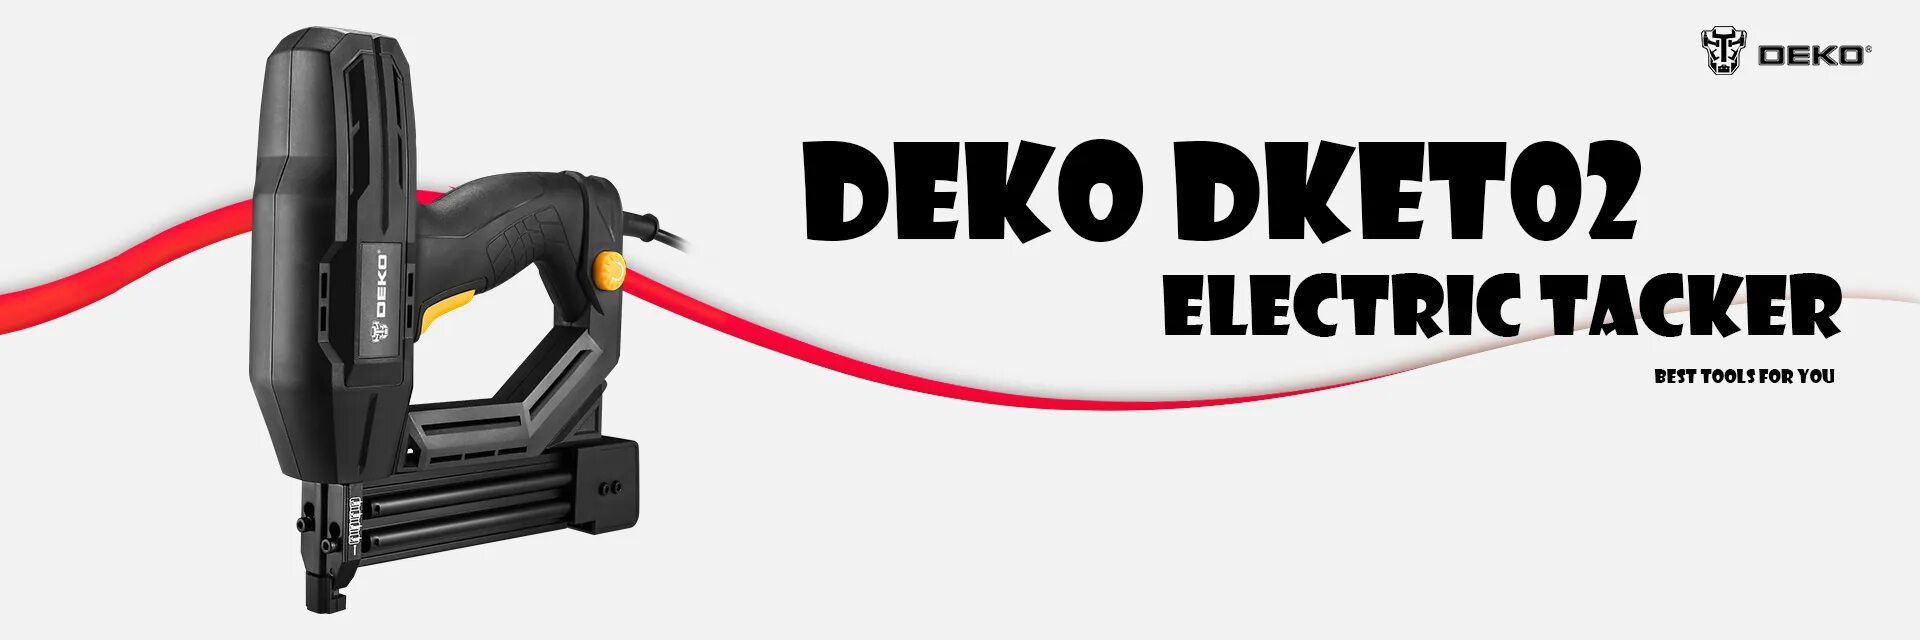 Deko dkes01. Dket02 электрический степлер. Dket02 электрический степлер запчасти. Deko степлер dkes02. Dket02 электрический степлер устройство.